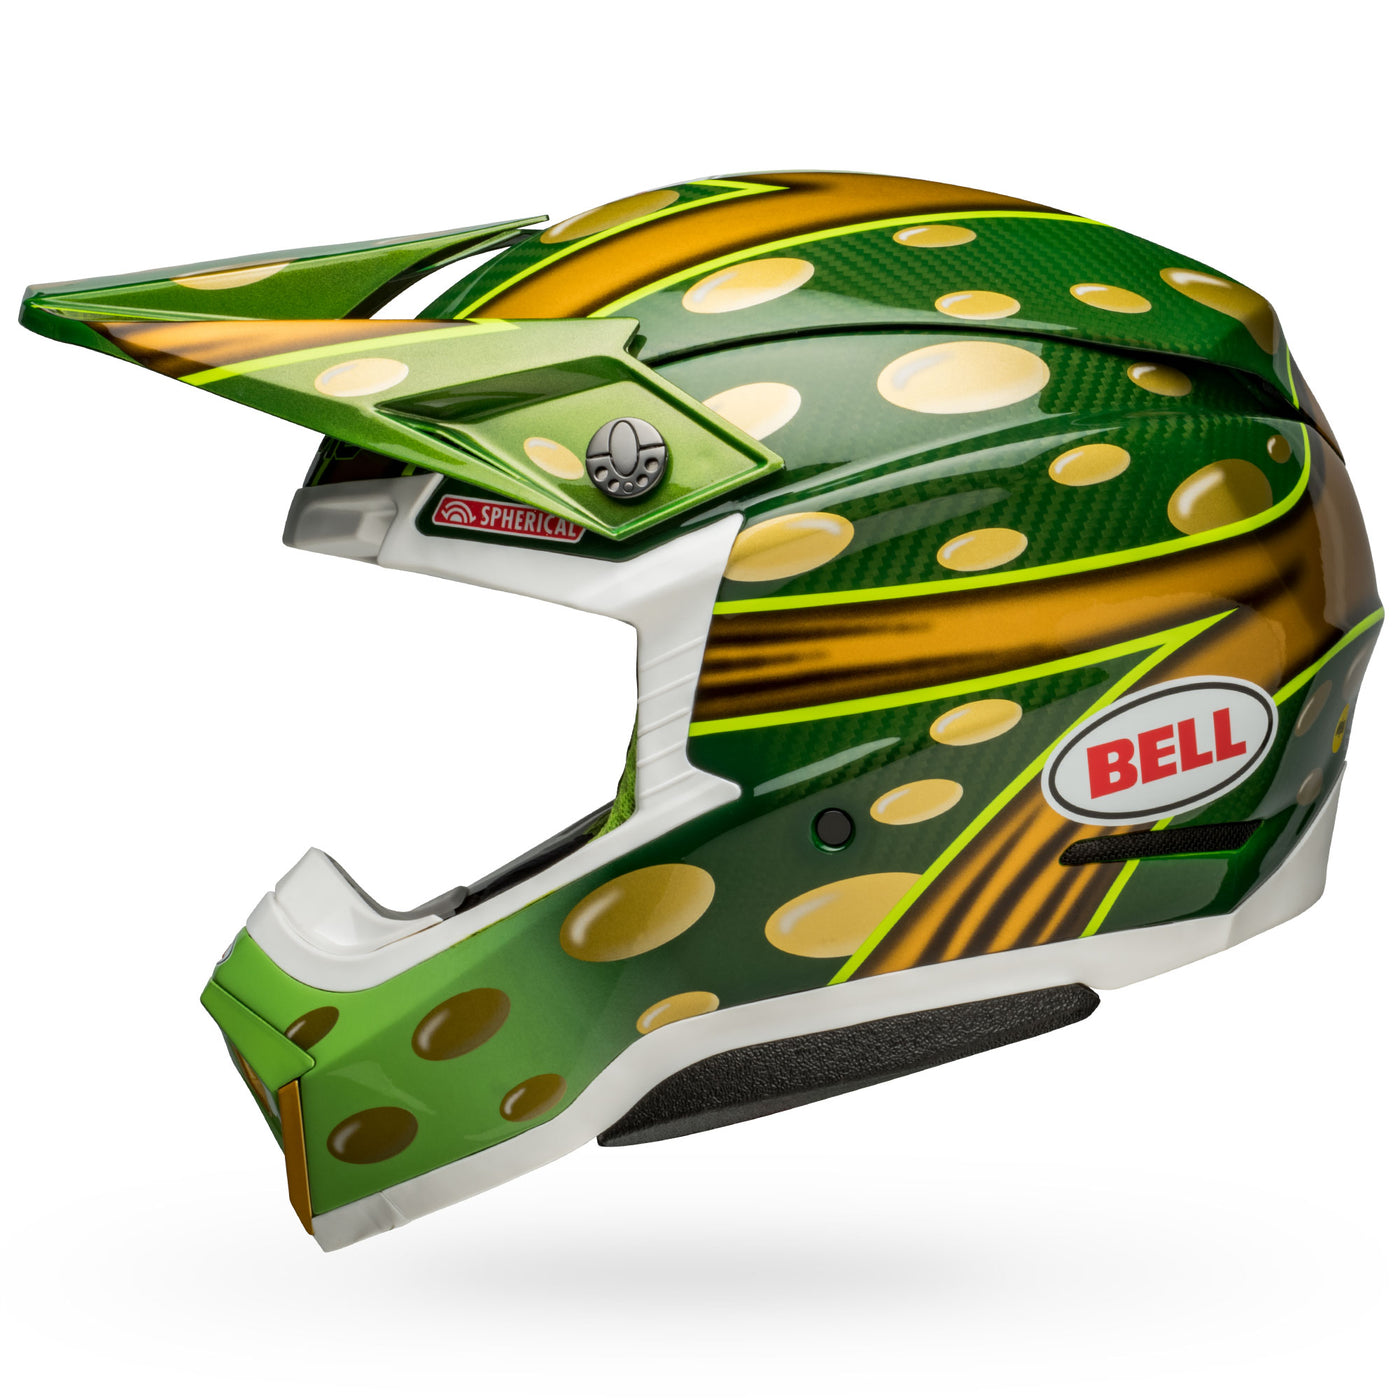 bell moto 10 spherical carbon dirt motorcycle helmet mcgrath replica 22 gloss gold green left